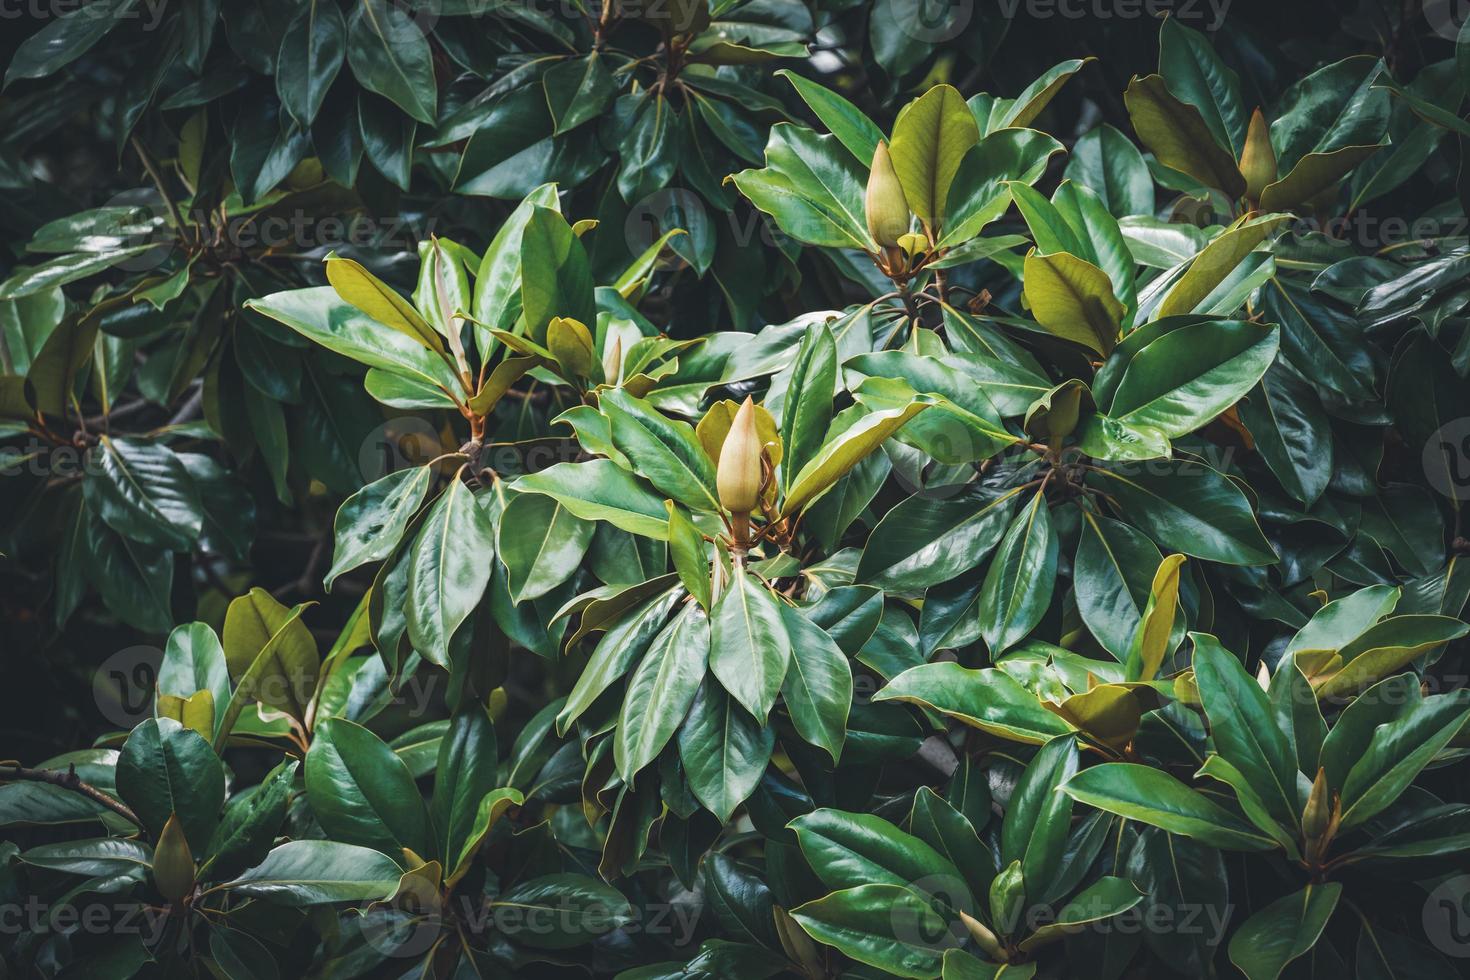 magnoliaknoppar bland det gröna bladverket foto